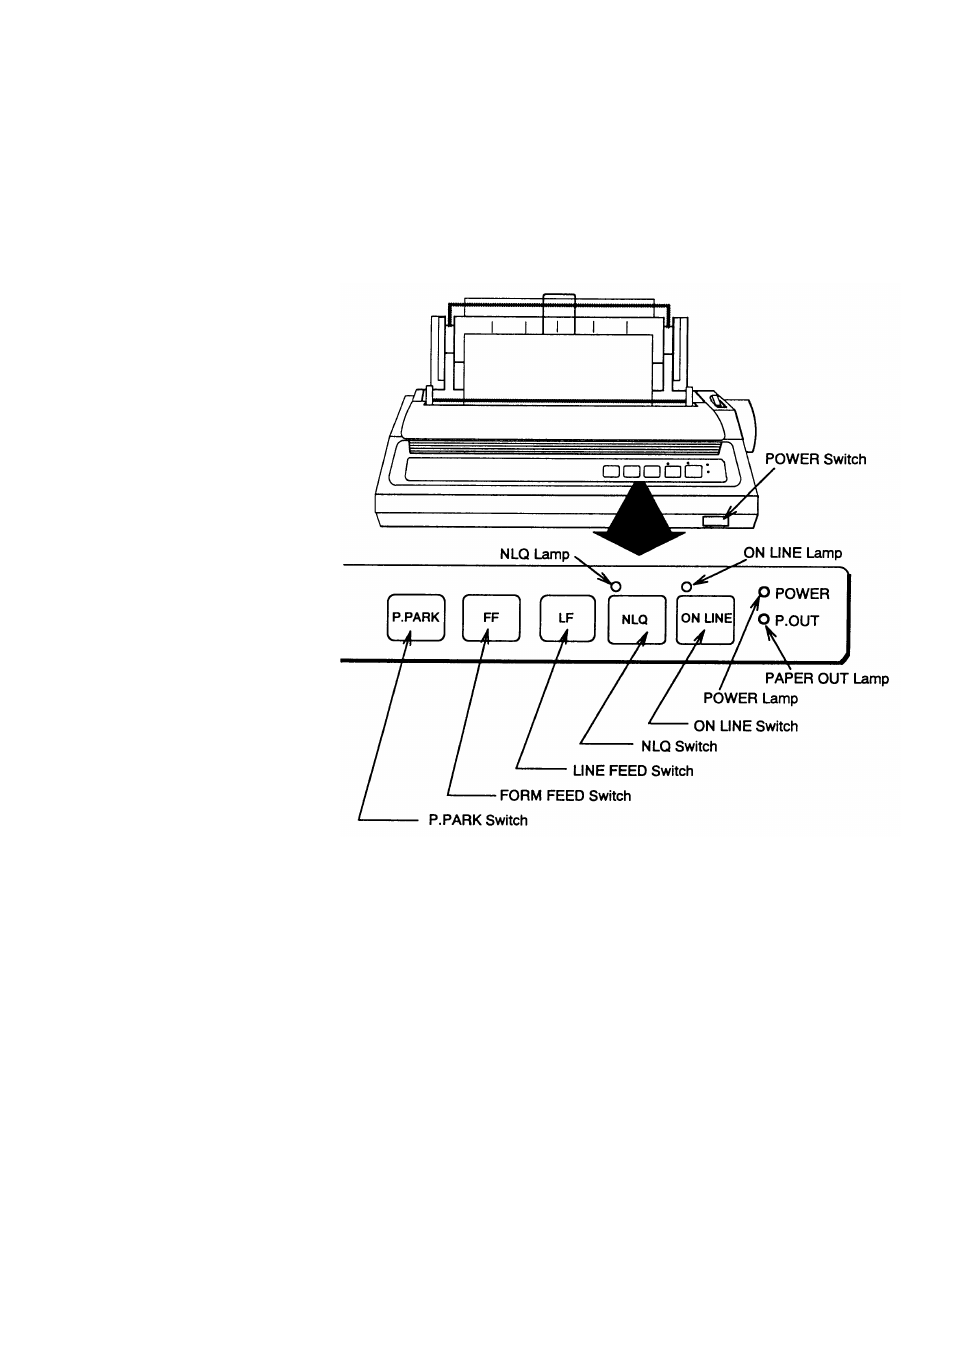 Printer pp-510 (optional supply) | Furuno INMARSAT-C MOBILE EARTH STATION  FELCOM 12 User Manual | Page 27 / 182